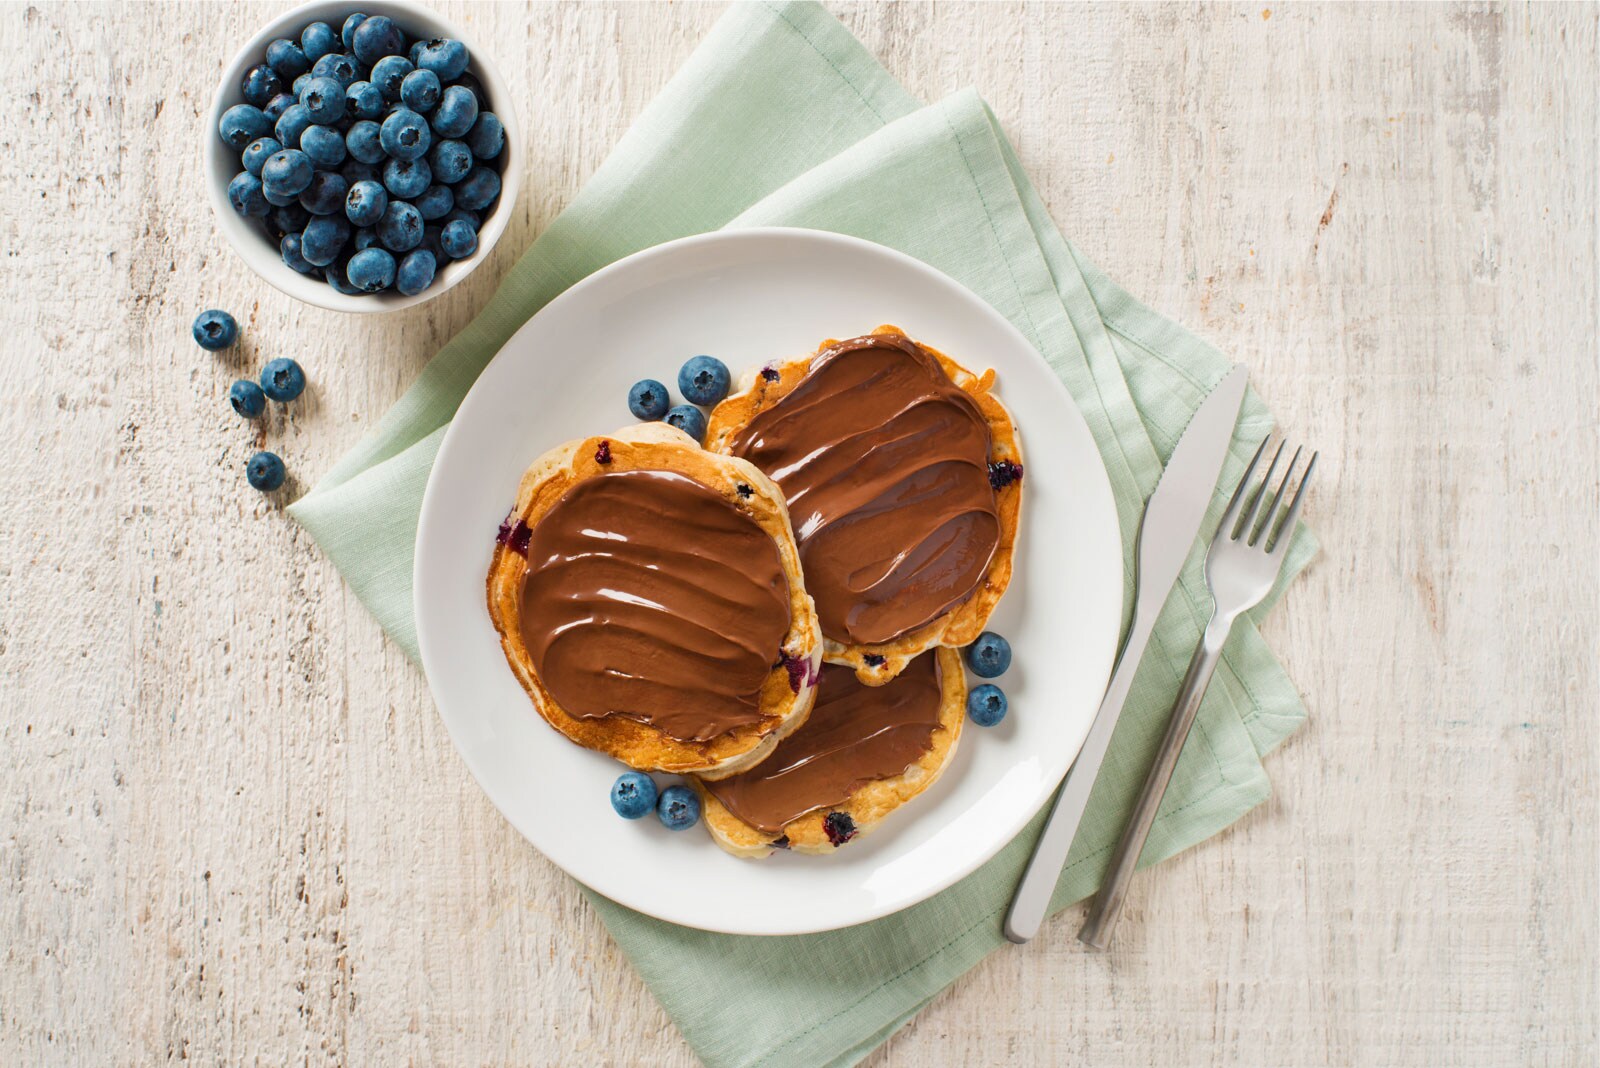 Yogurt and berry pancakes with Nutella® chocolate hazelnut spread